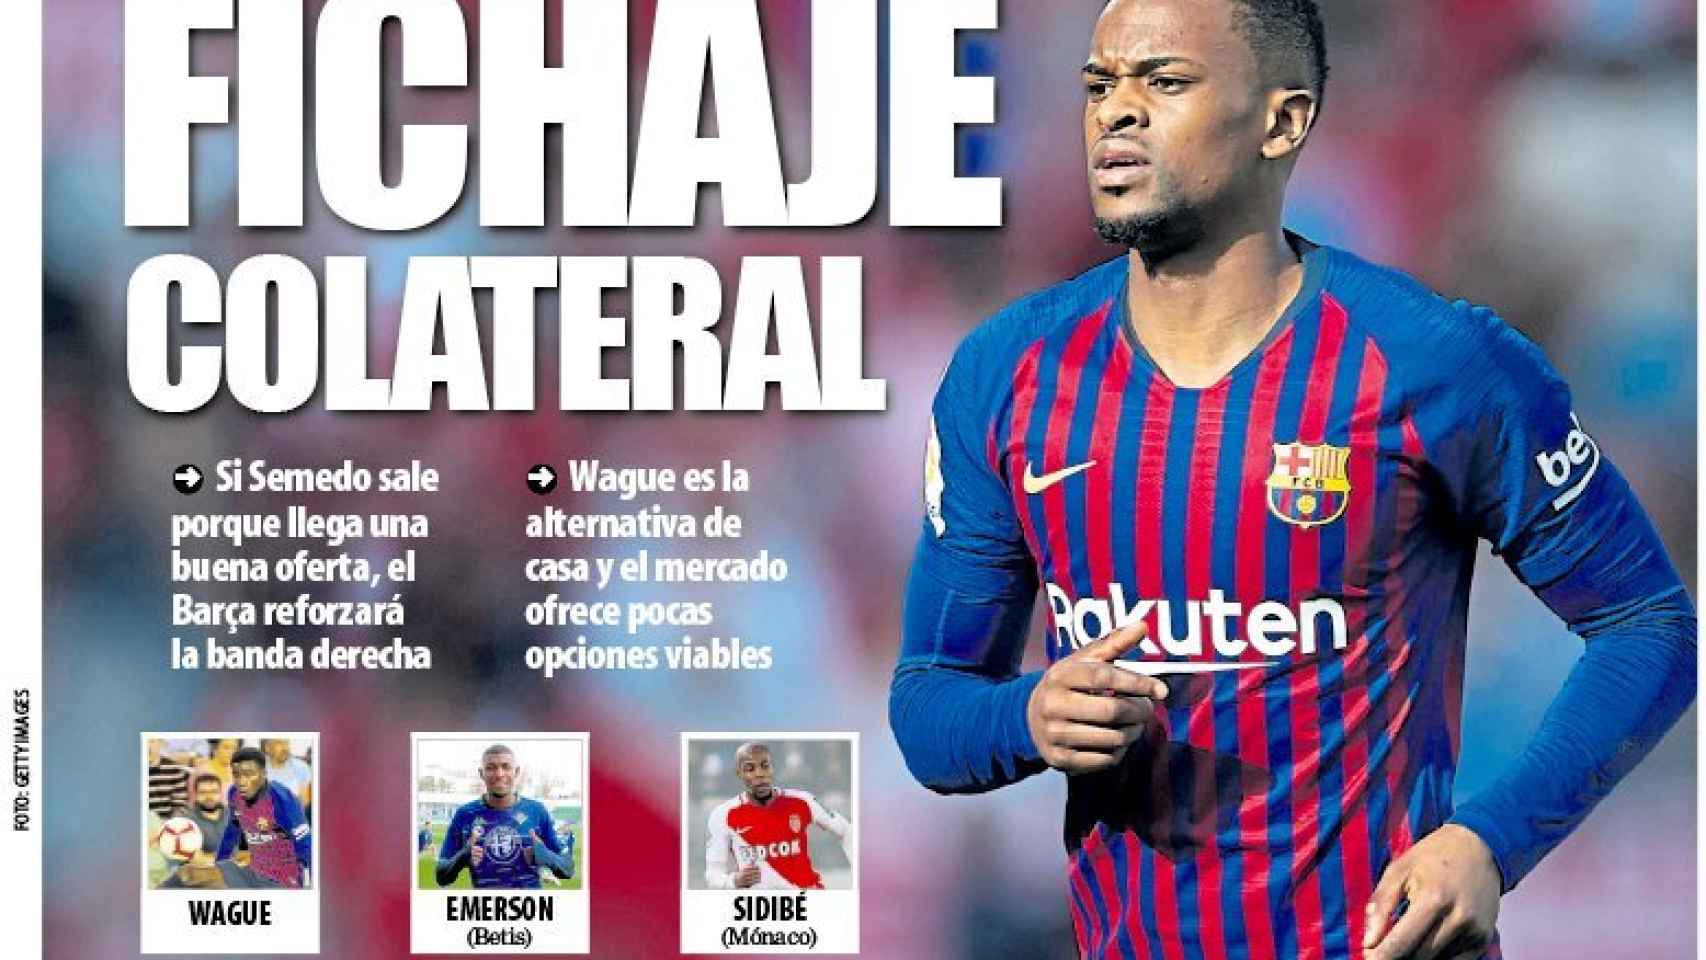 La portada del diario Mundo Deportivo (06/06/2019)1706 x 960